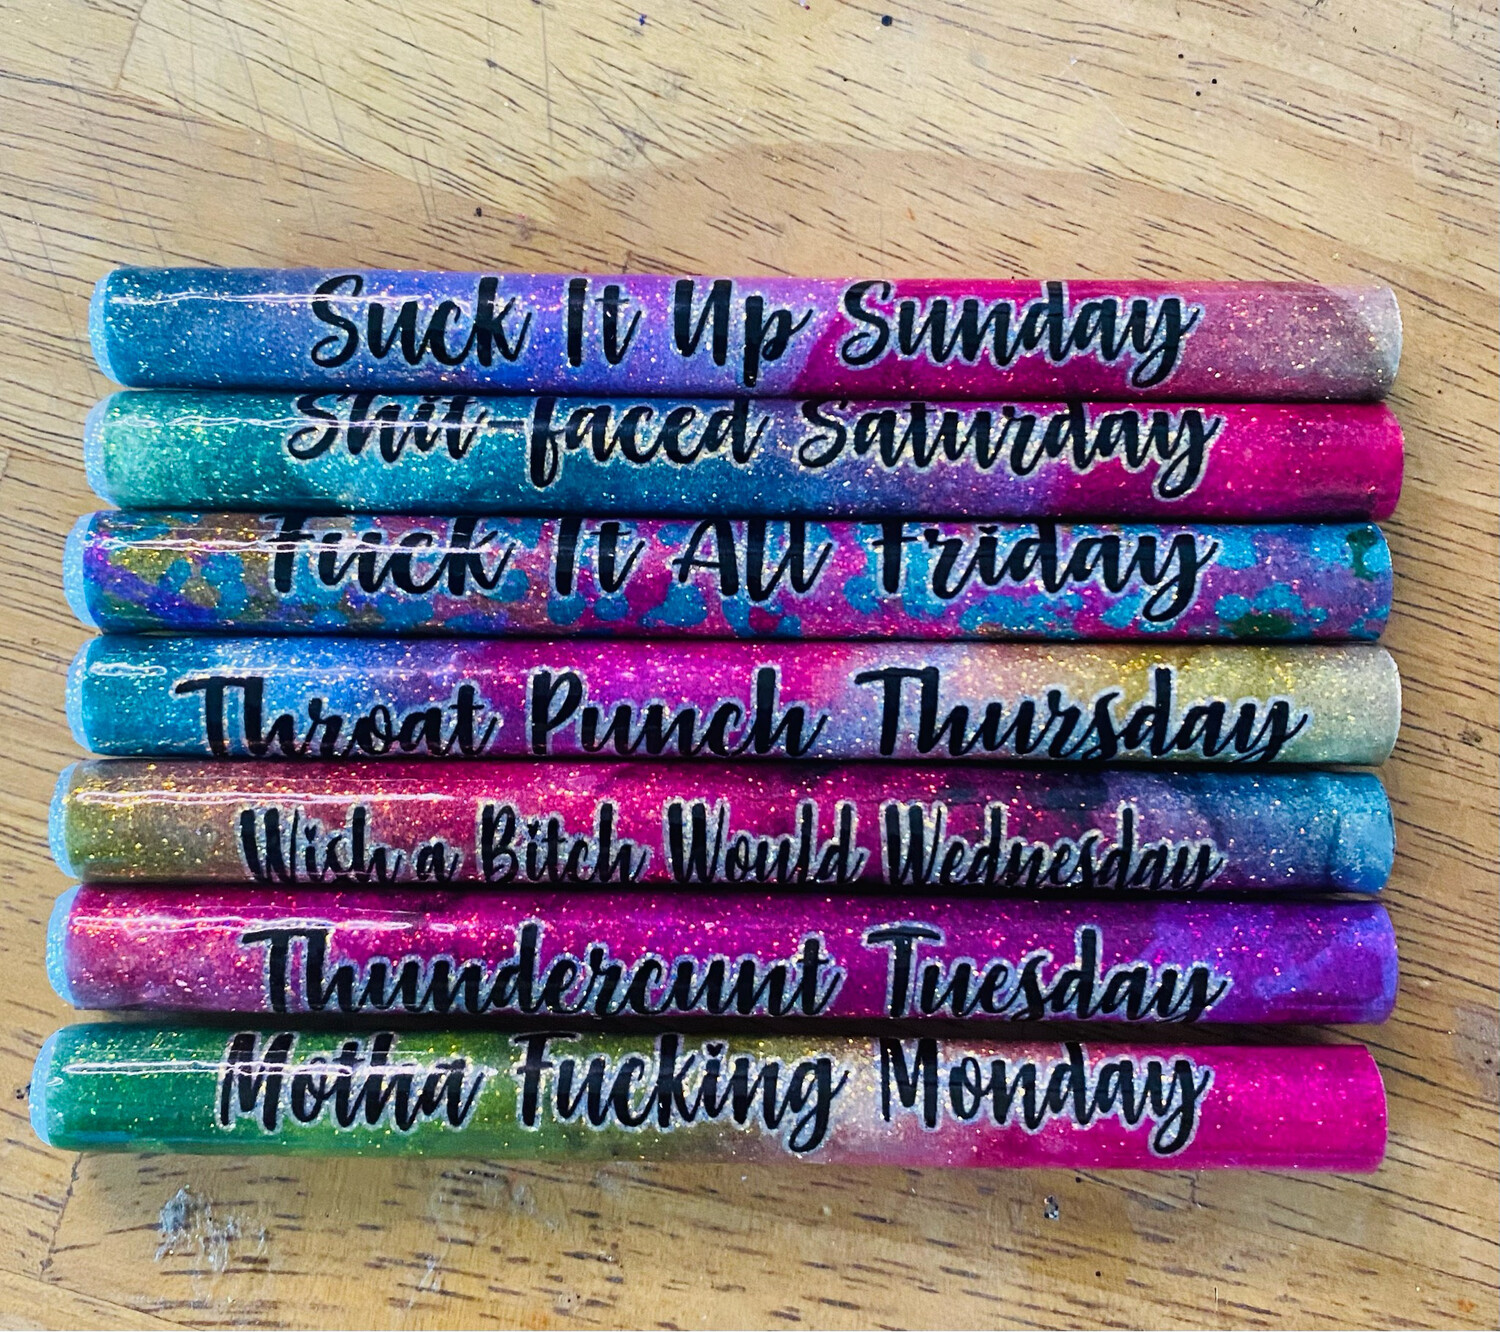 Days of The Week Pen Set